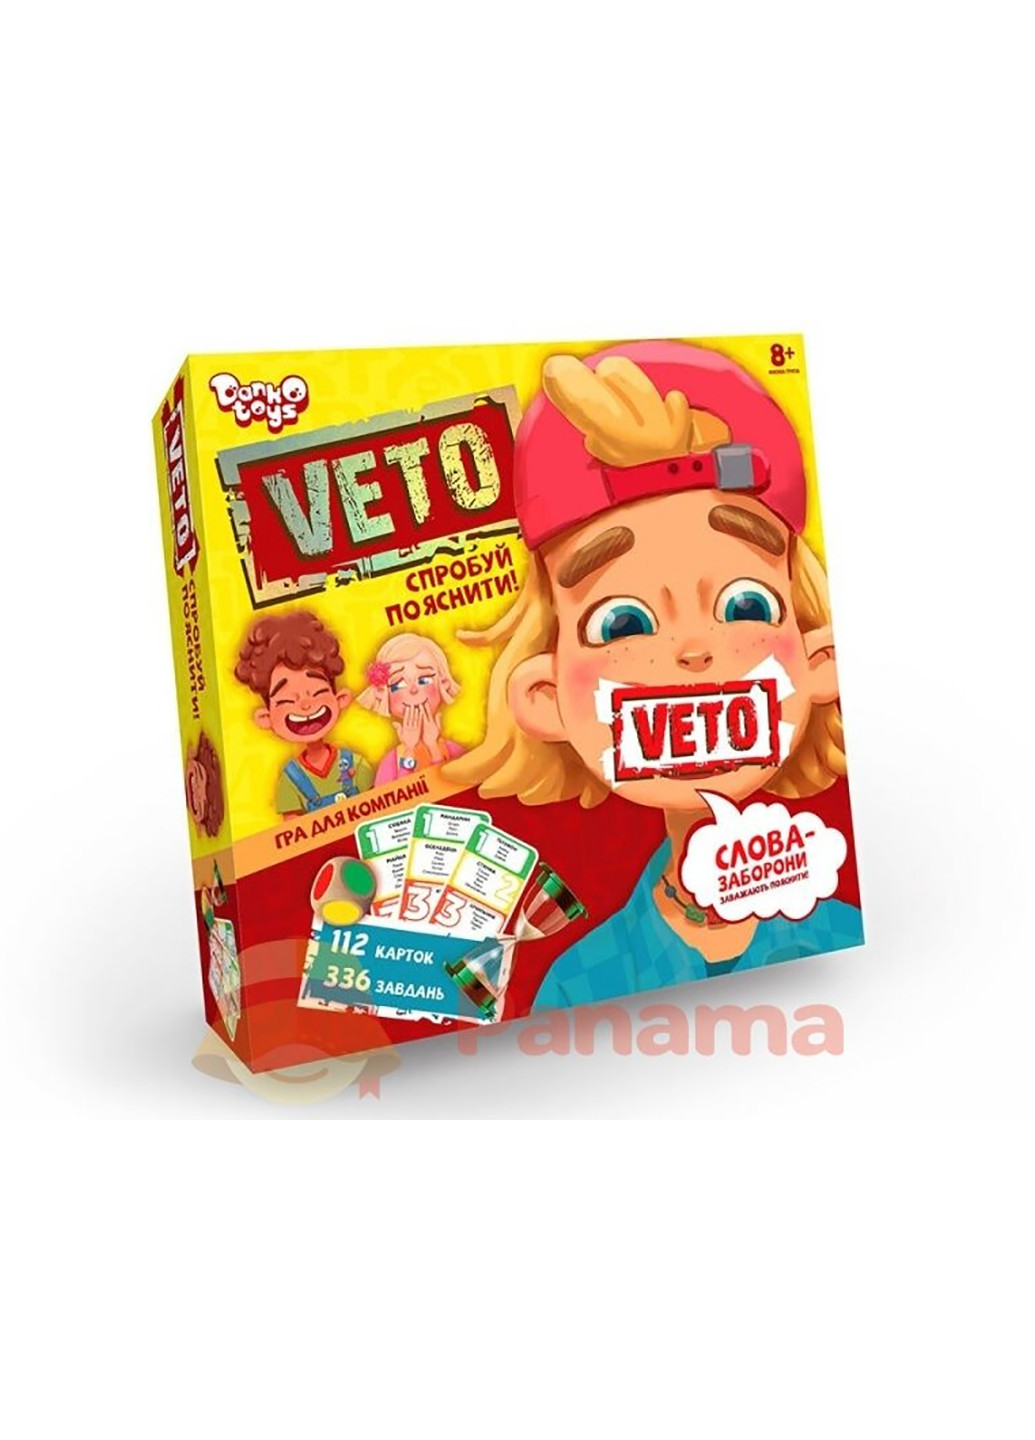 Карткова настільна гра "VETO", укр () Danko Toys veto-01-01u (255260103)